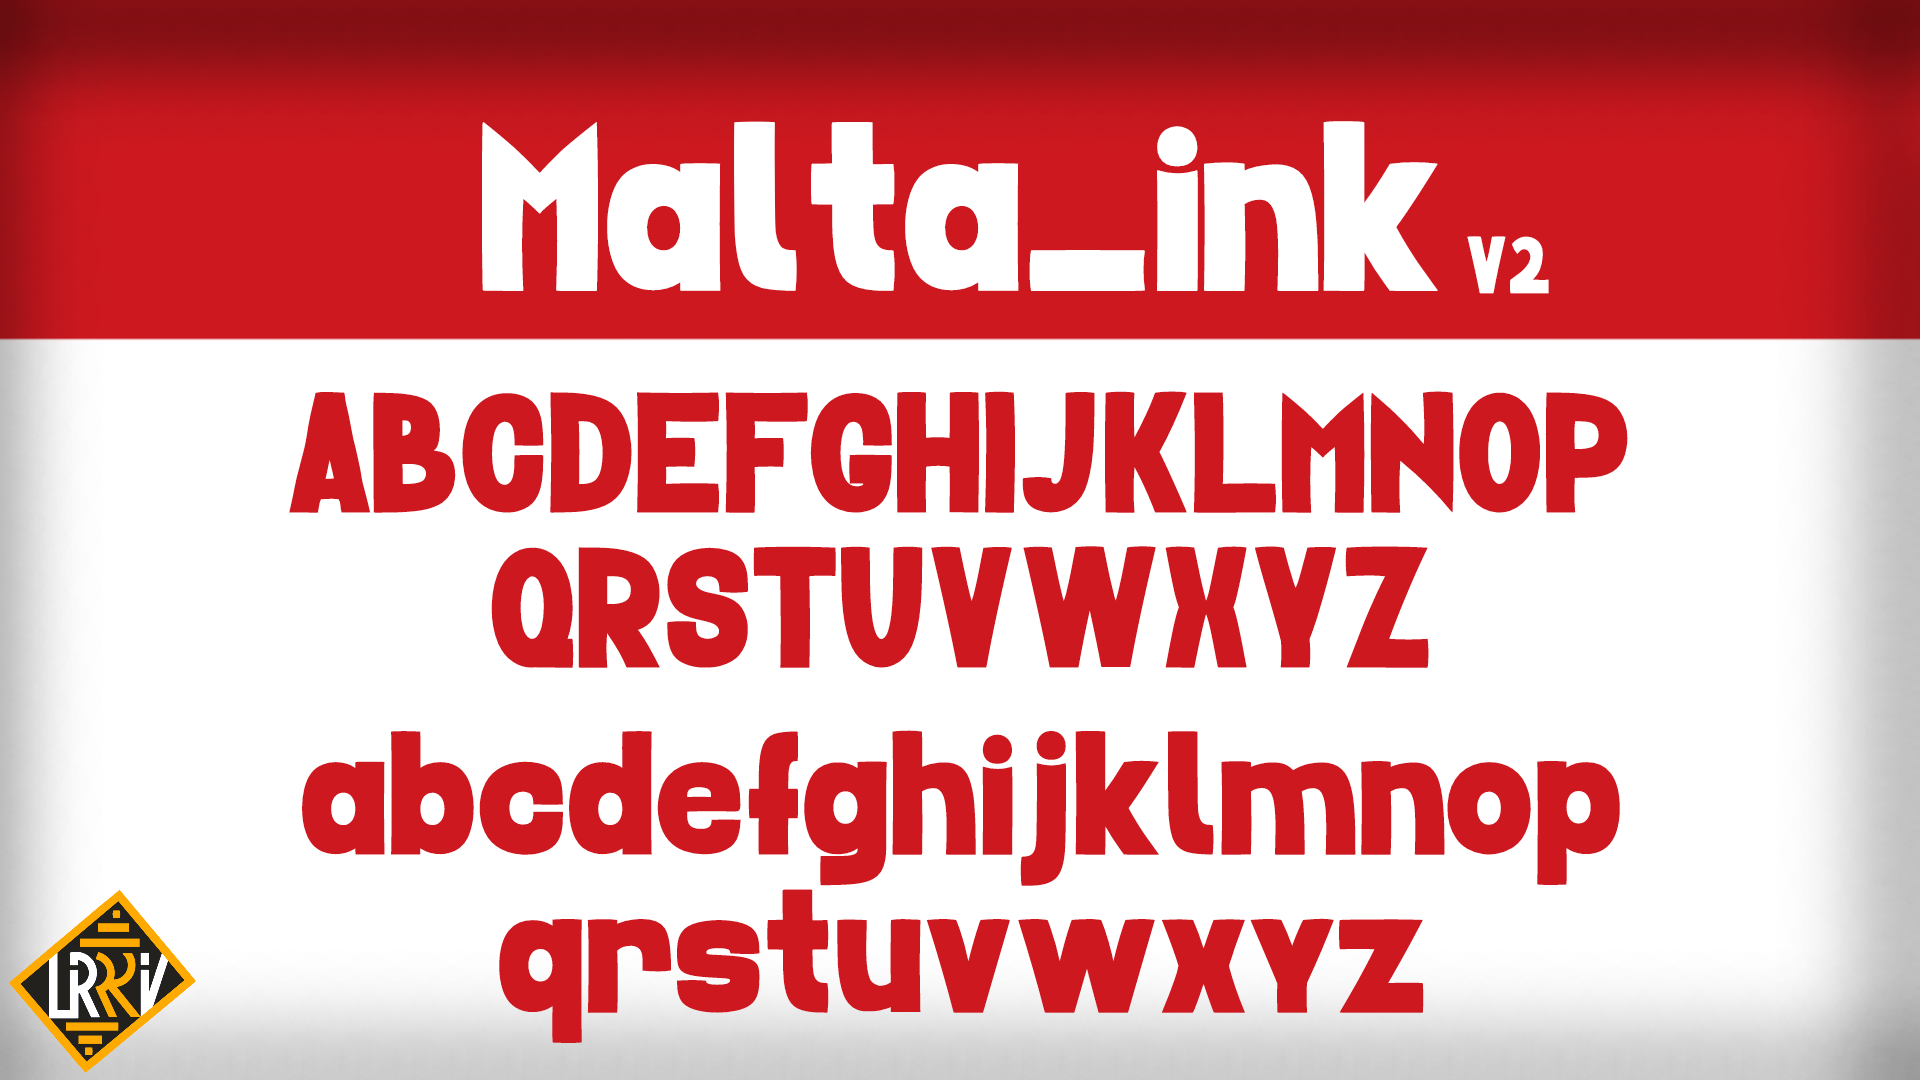 Malta_INK